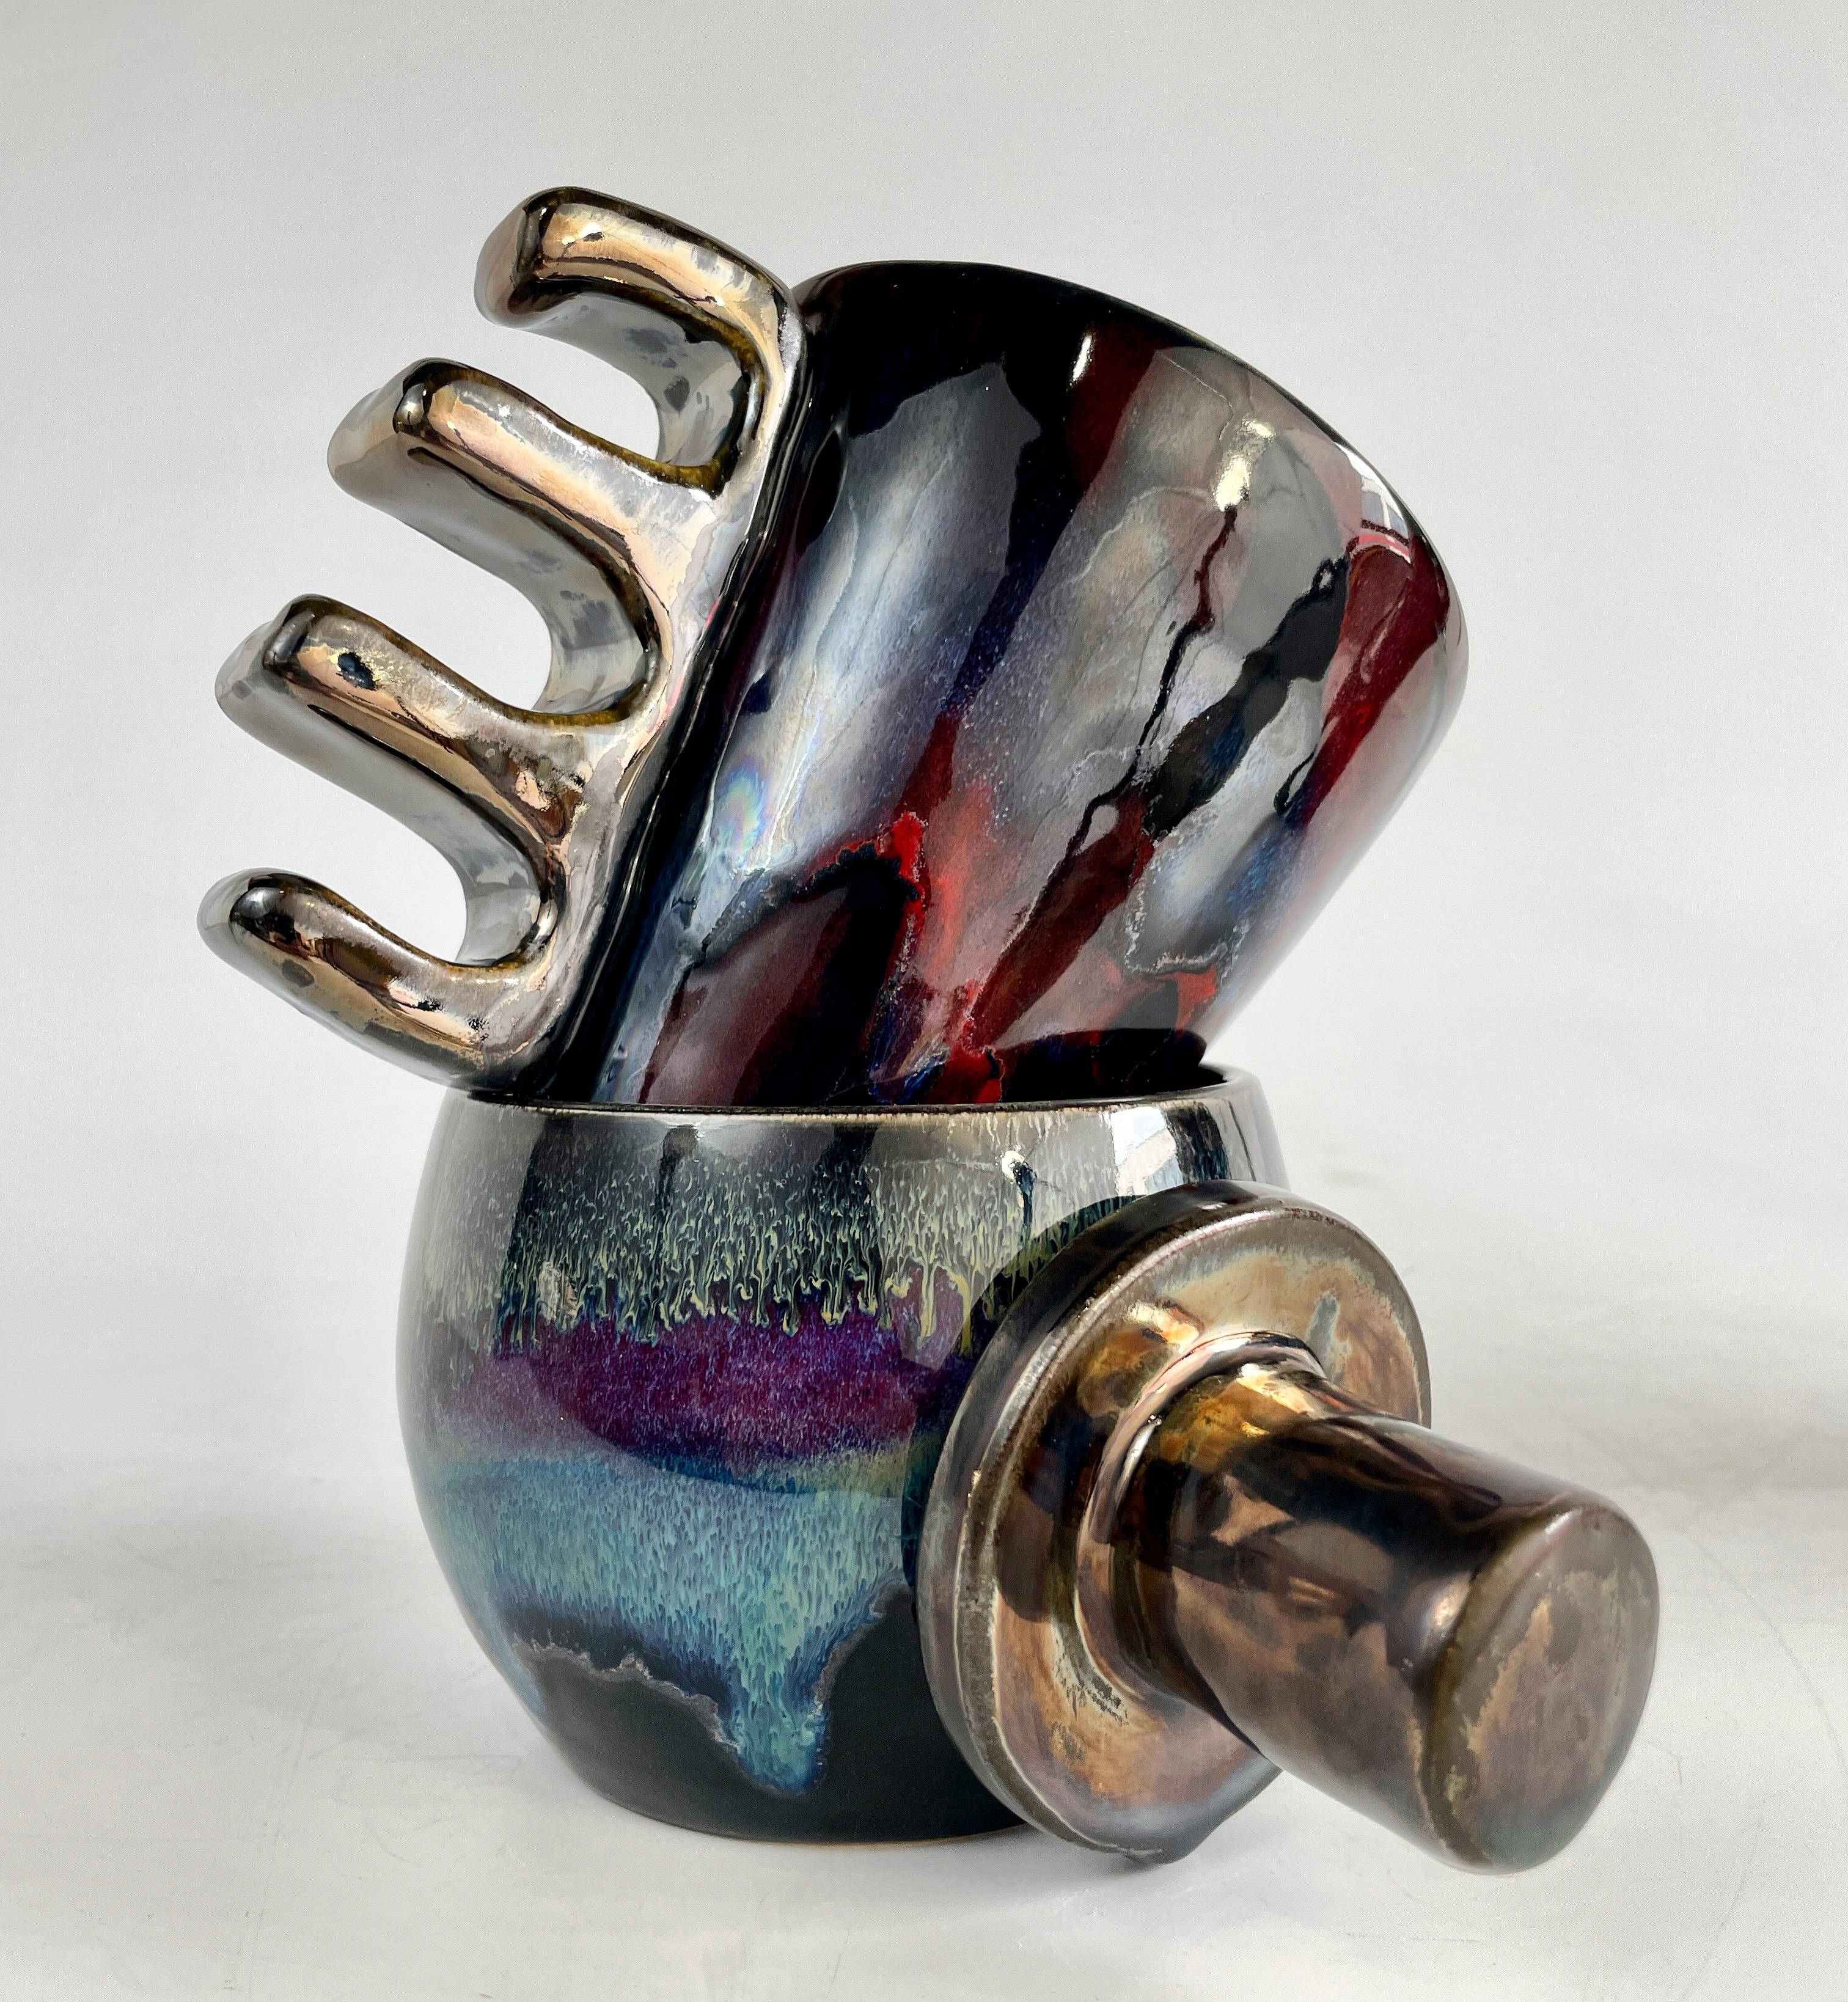 Hand-Crafted Knuckler Four Finger V, Handmade and Food Safe, by Ceramicist Stef Duffy For Sale